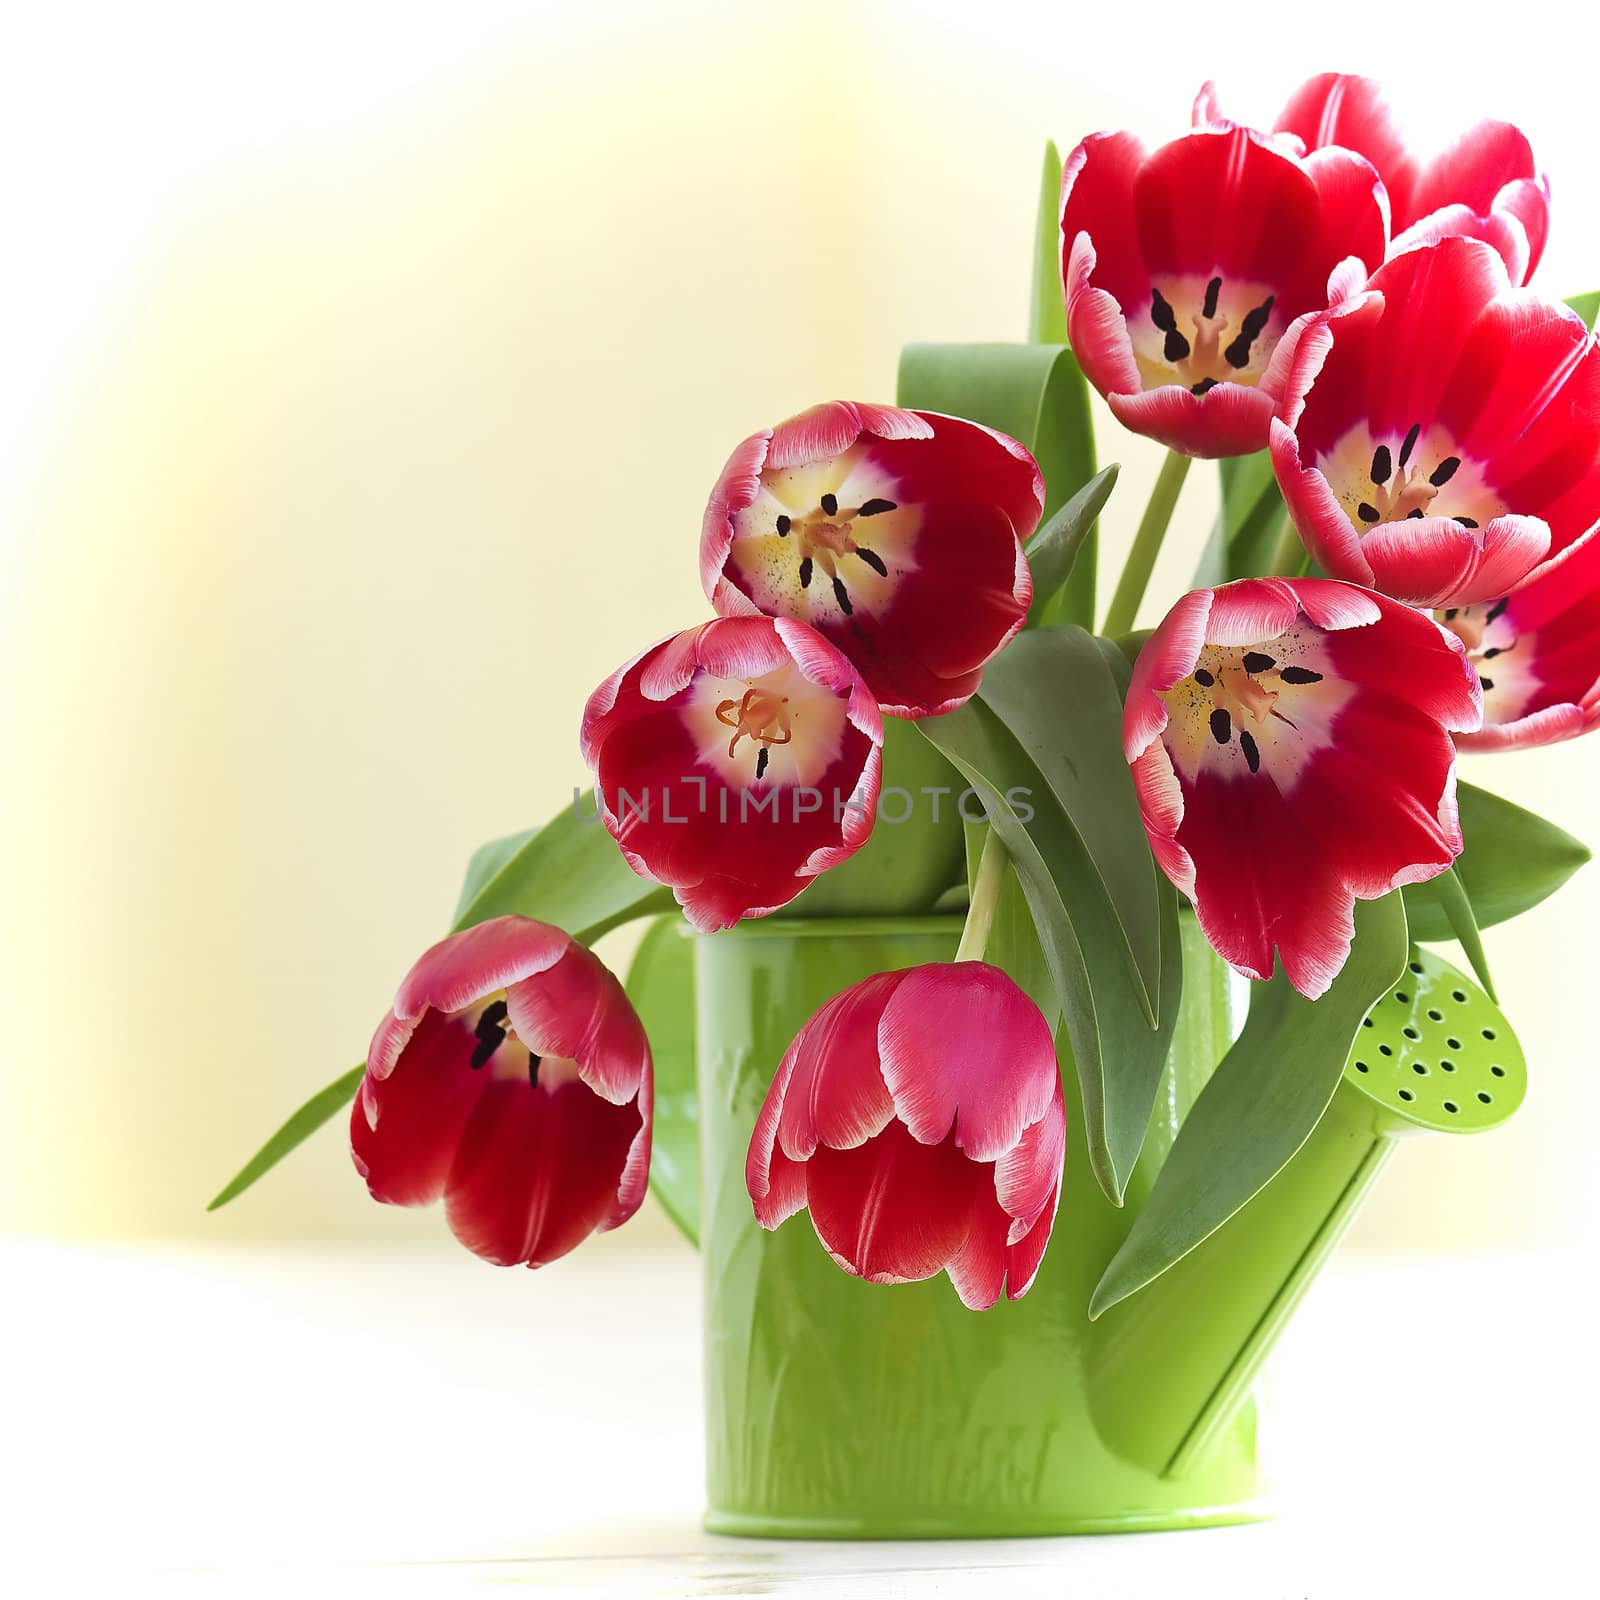 bunch of red tulips by miradrozdowski